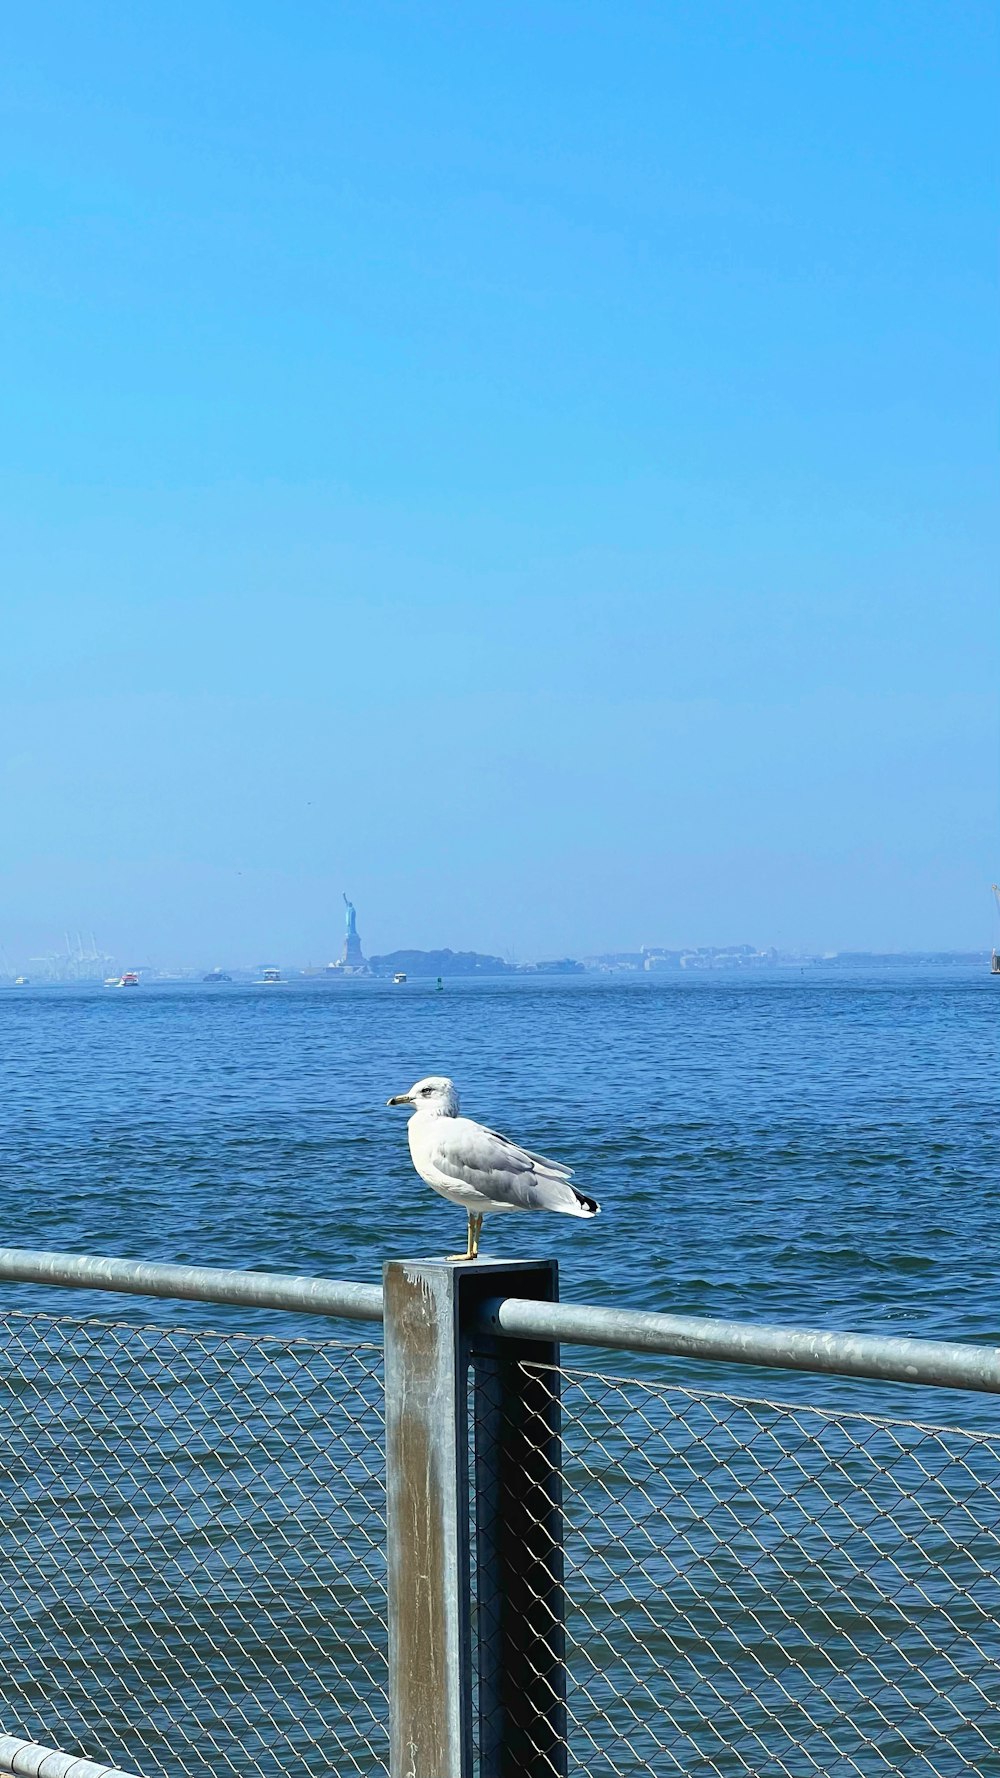 a seagull sitting on a fence near the ocean